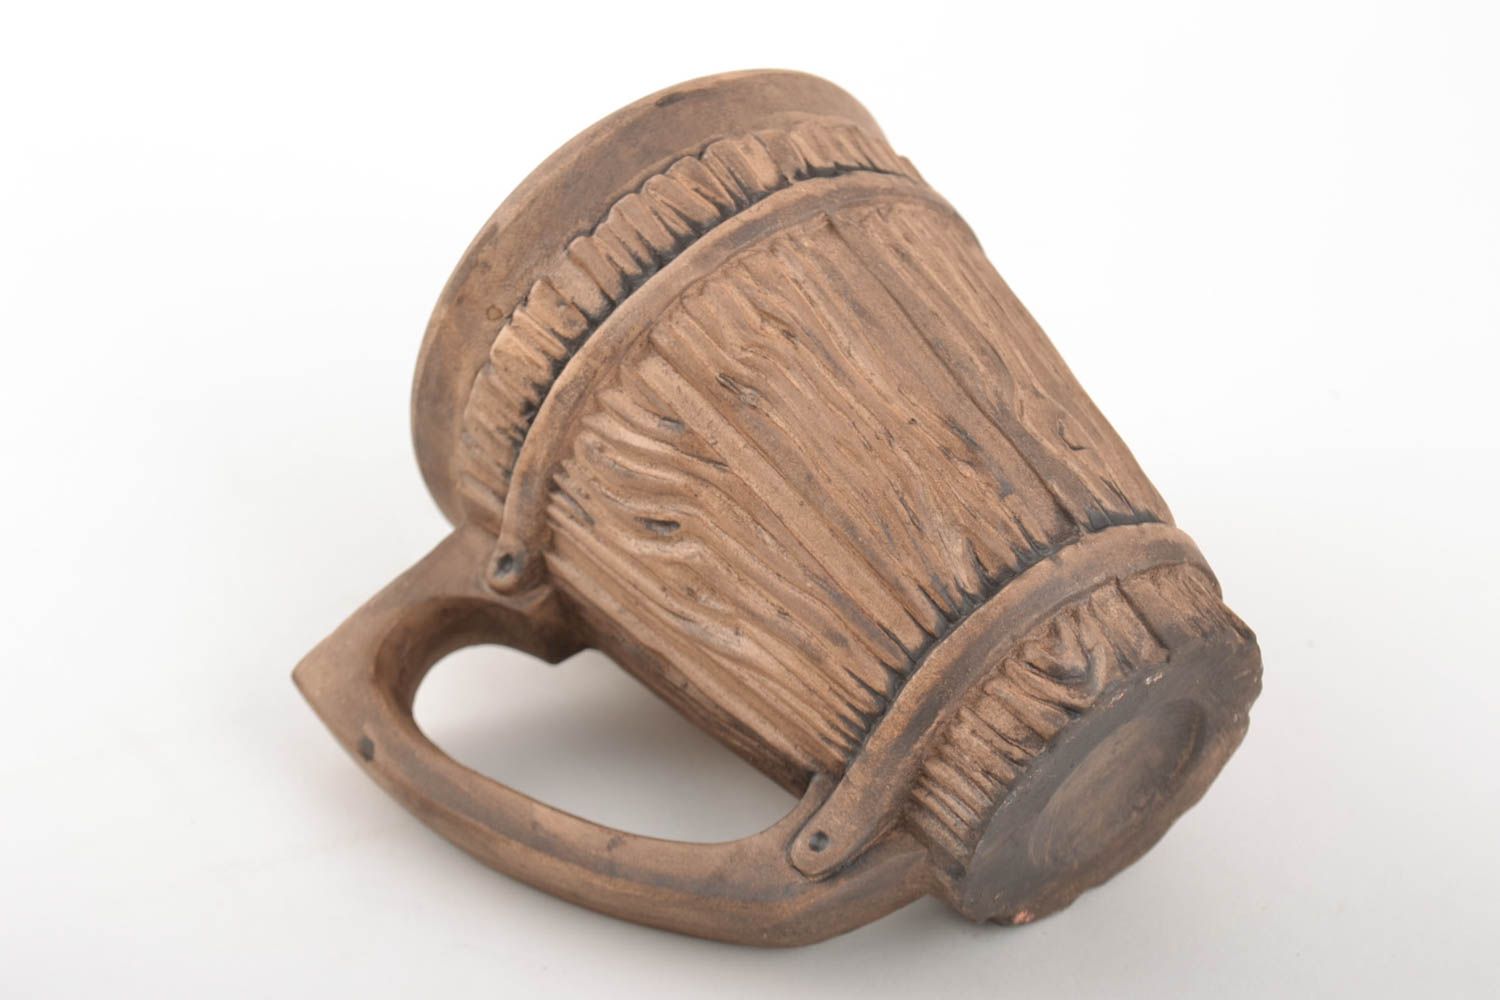 11 oz clay tea mug with handle in fake wood style 0,75 lb photo 4